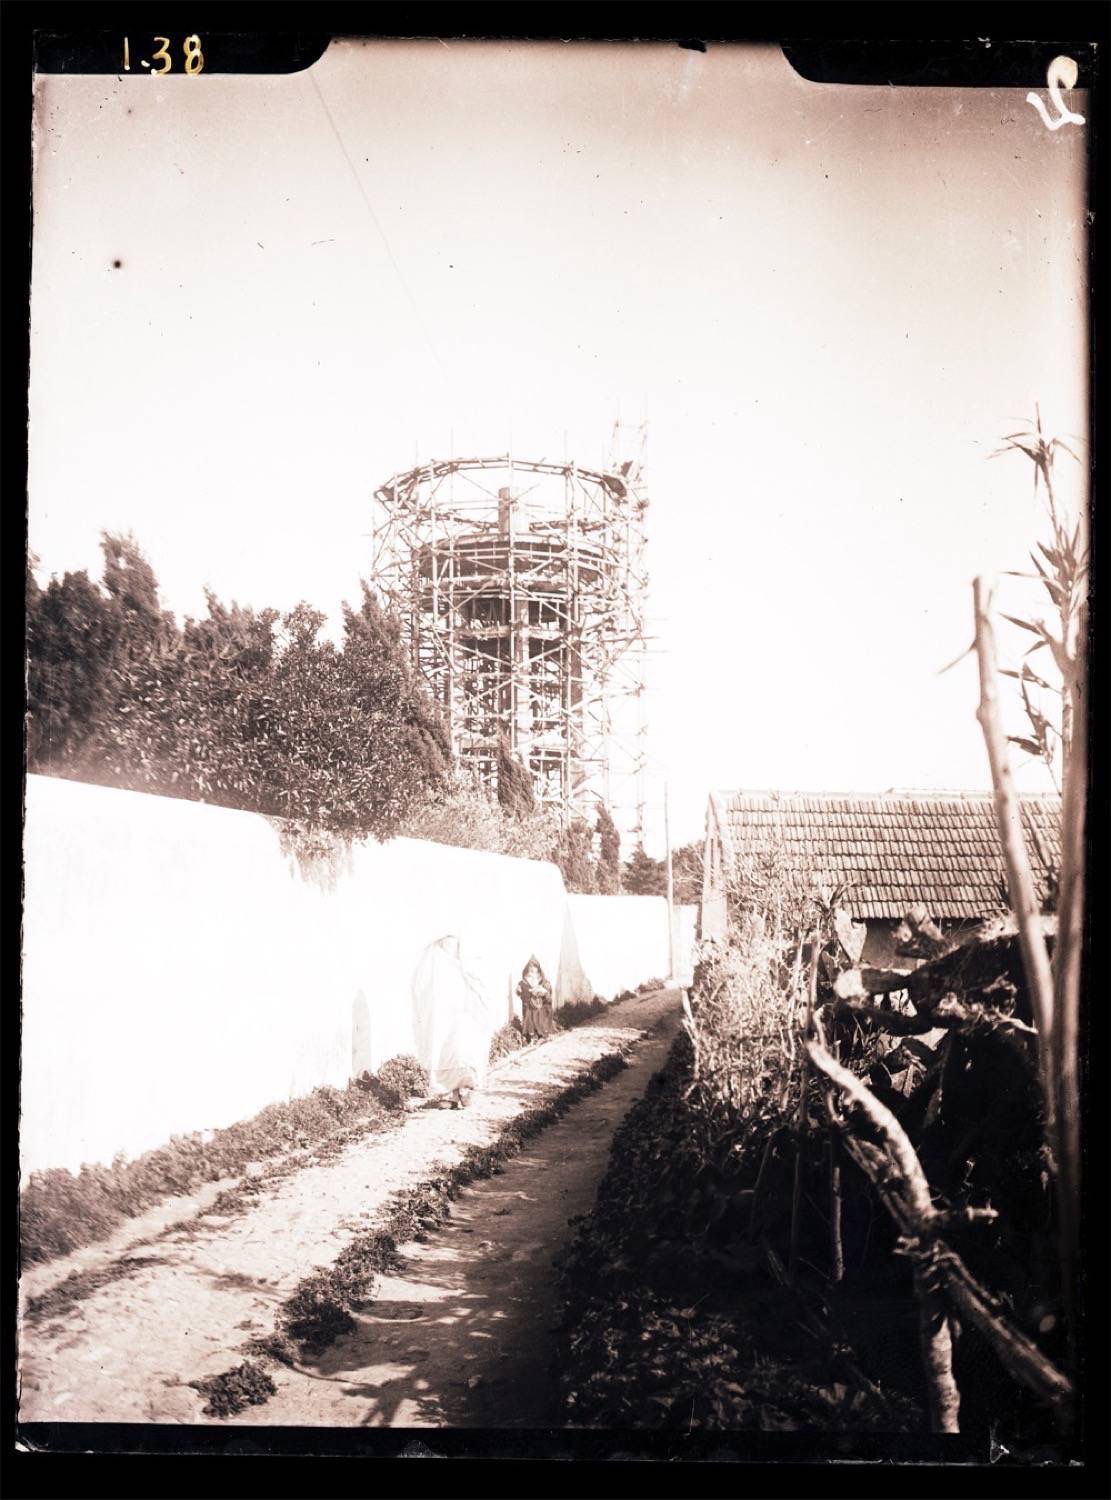 Marshan - Marshan water tower under construction